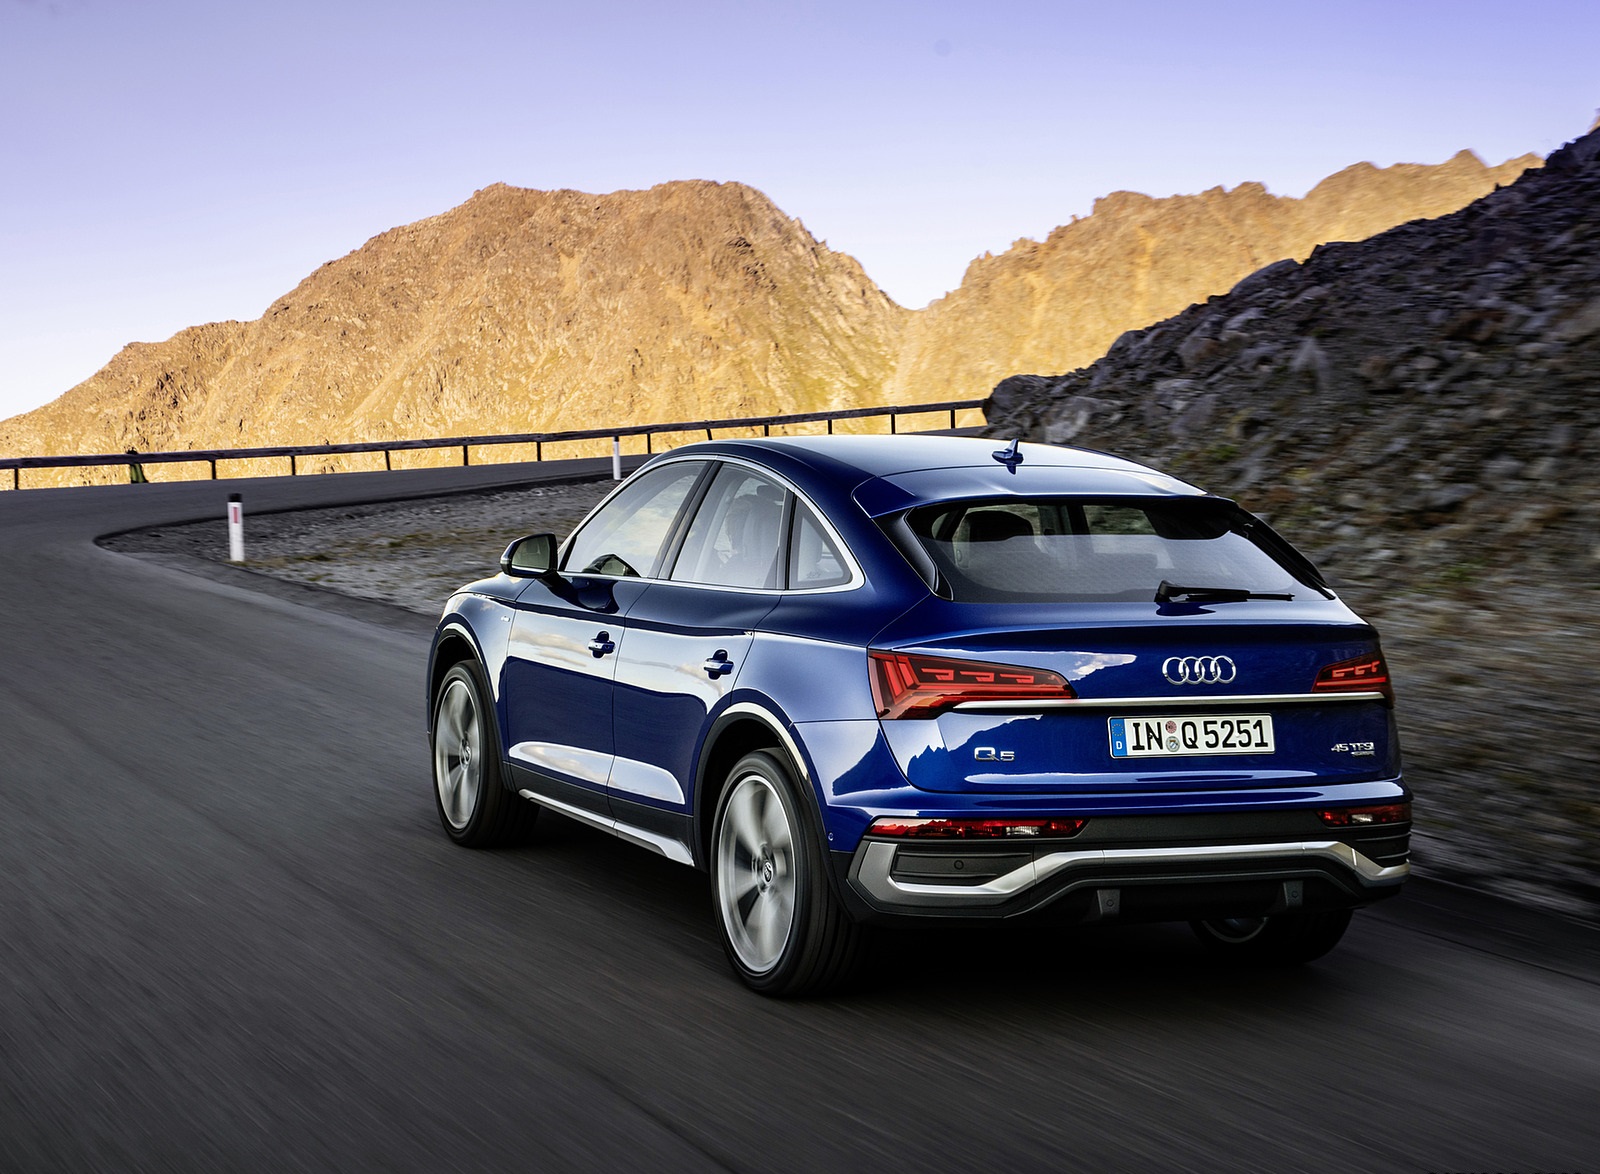 2021 Audi Q5 Sportback (Color: Ultra Blue) Rear Three-Quarter Wallpapers  #64 of 158